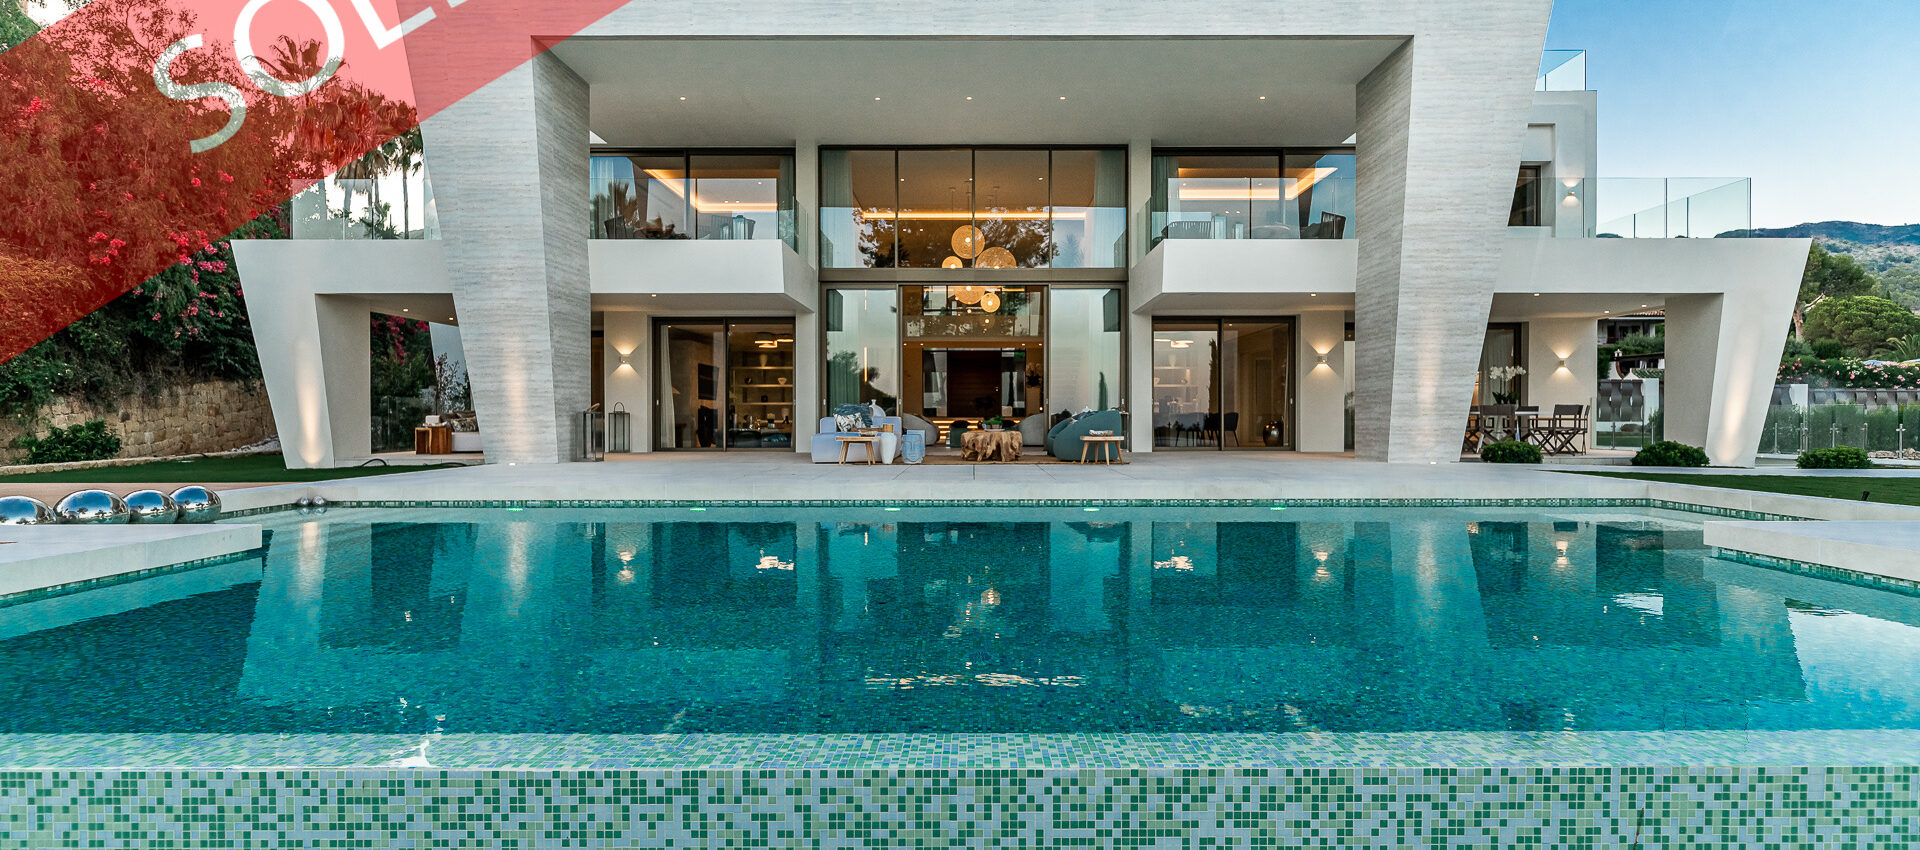 True luxury in SIERRA BLANCA – An Exceptional Villa in Marbella